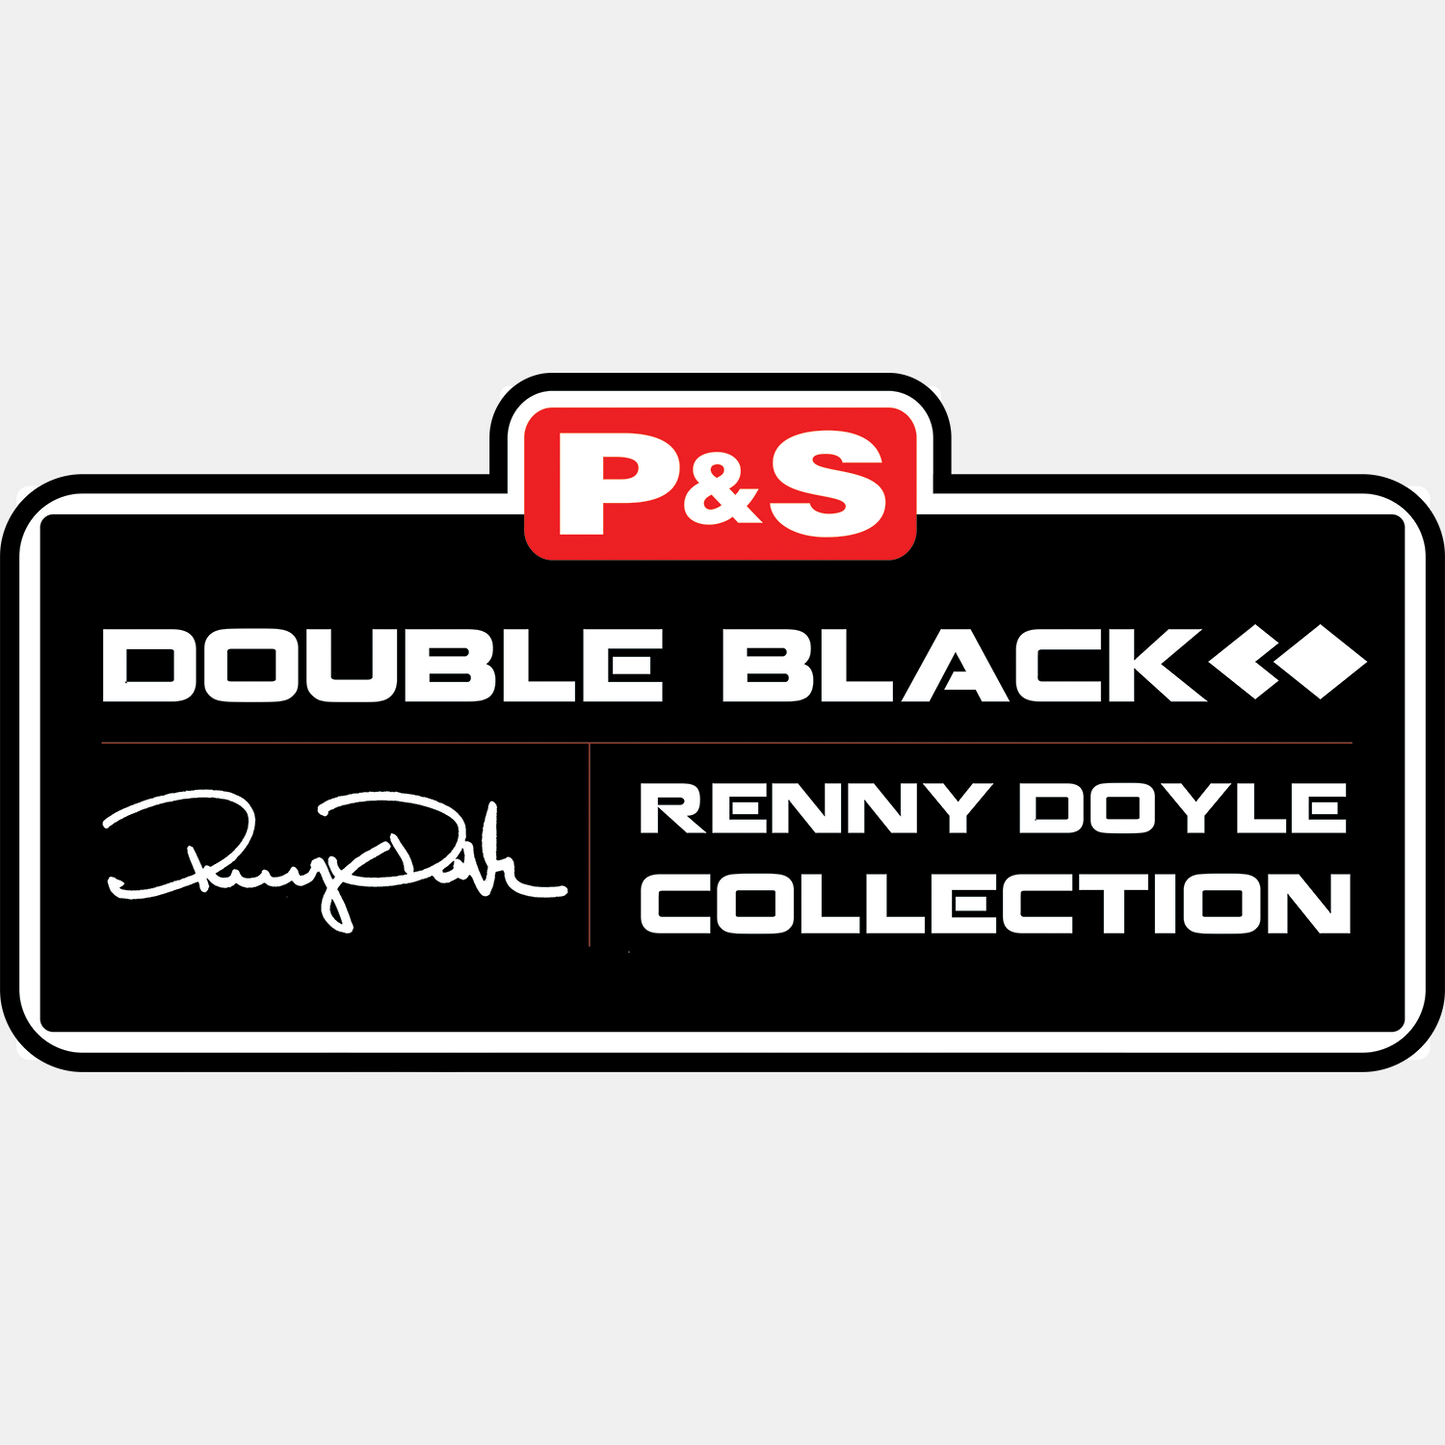 Double Black Giant Sticker